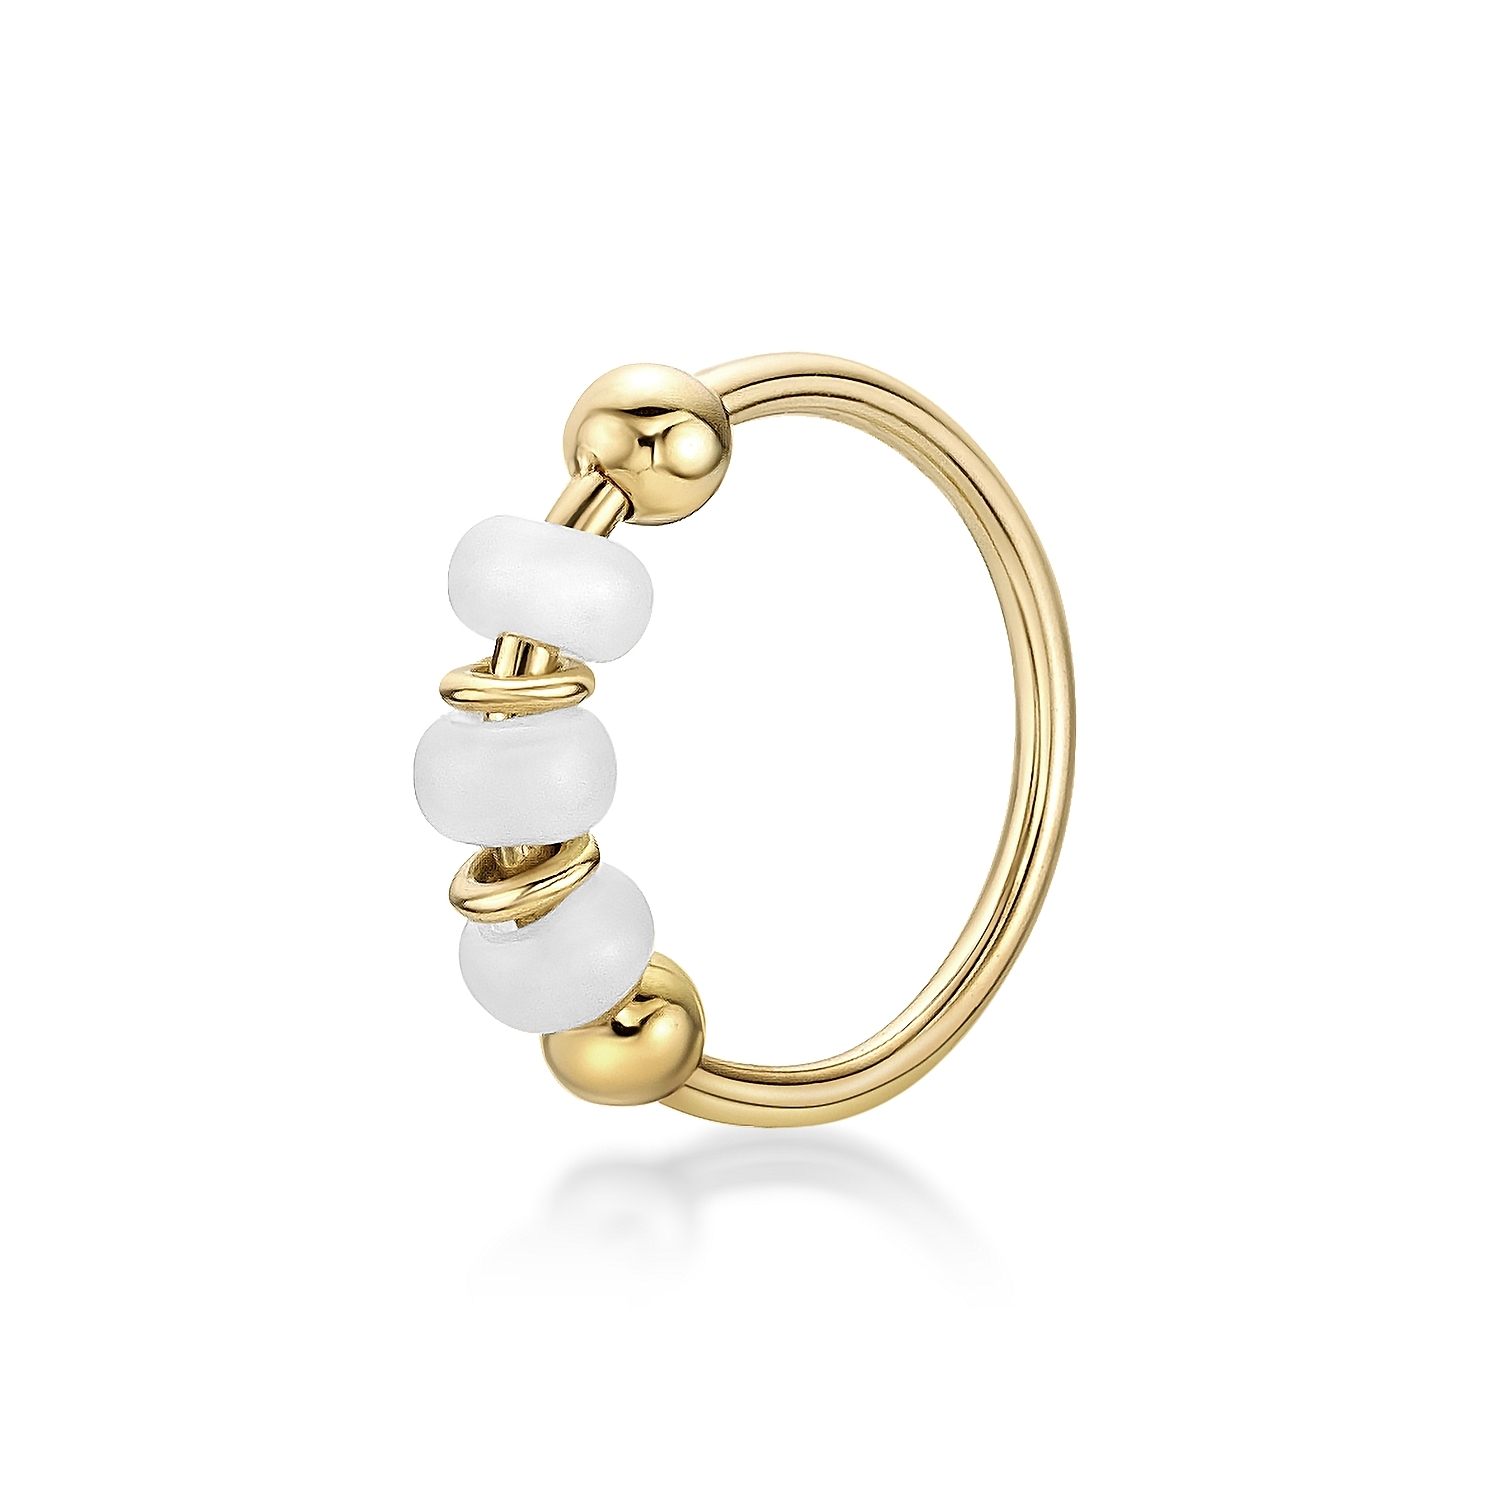 Lavari Jewelers Women's 10 MM Hoop Nose Ring with White Beads, 14K Yellow Gold, 20 Gauge